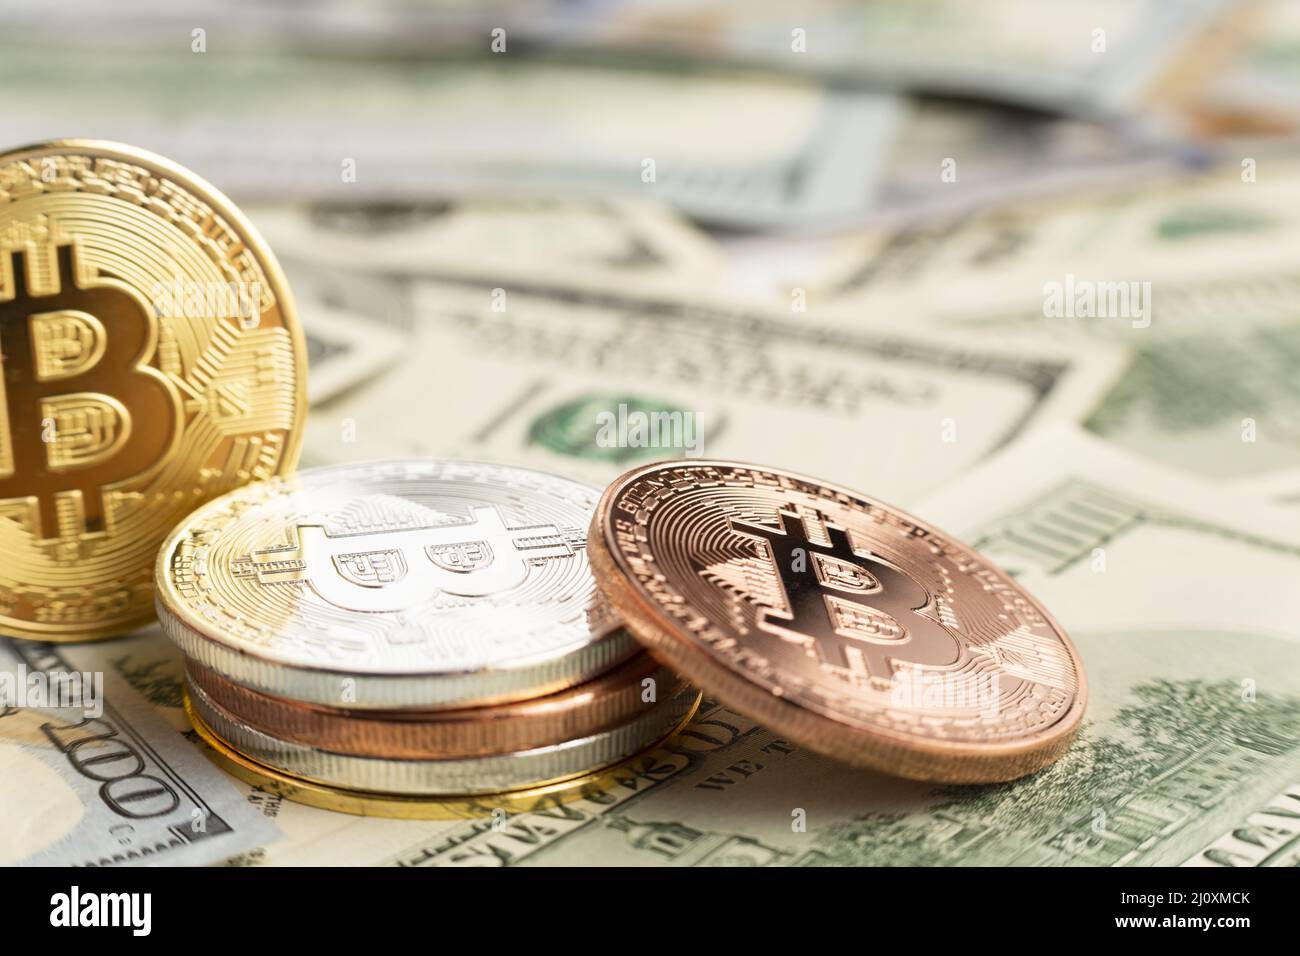 Bitcoin pile top dolar bills. High quality beautiful photo concept Stock Photo